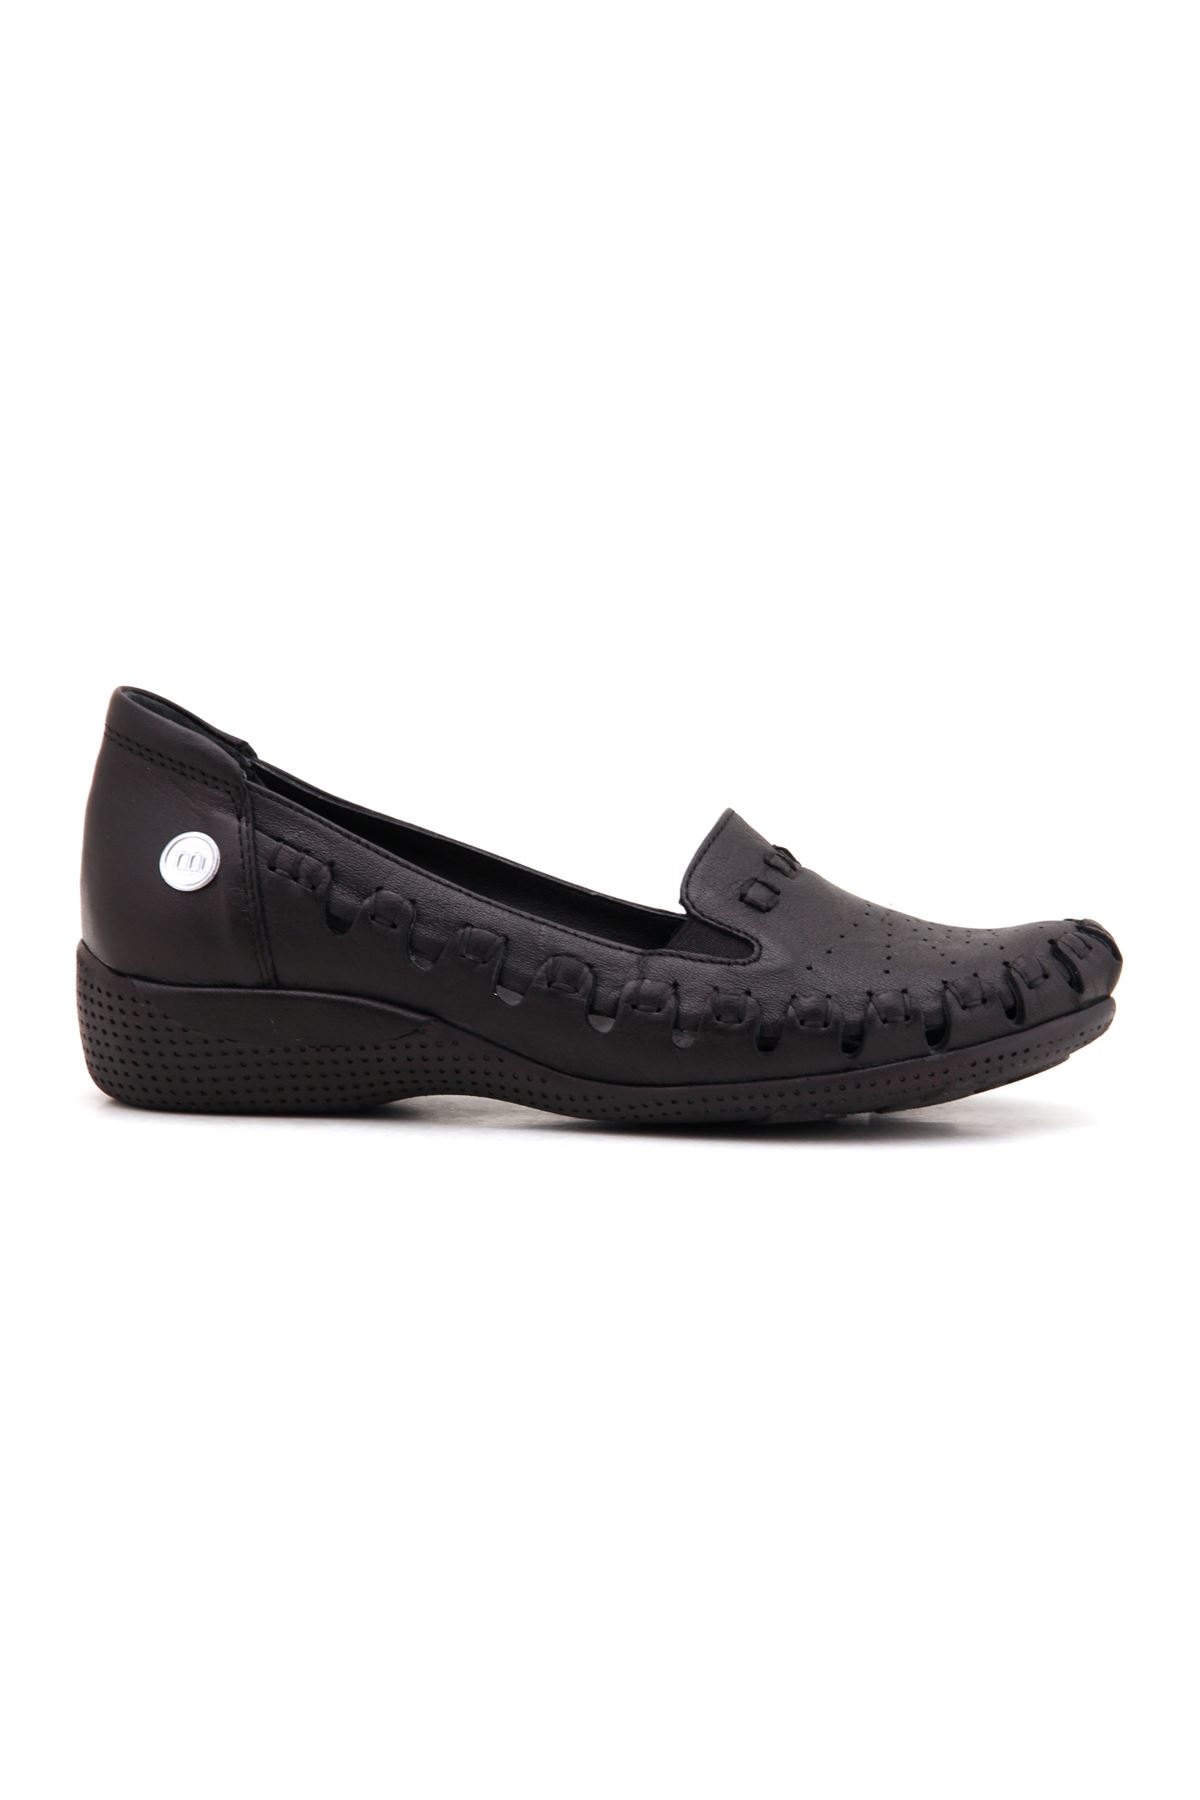 Mammamia D22YA-3520 Hakiki Deri Kadın Ayakkabı - Siyah